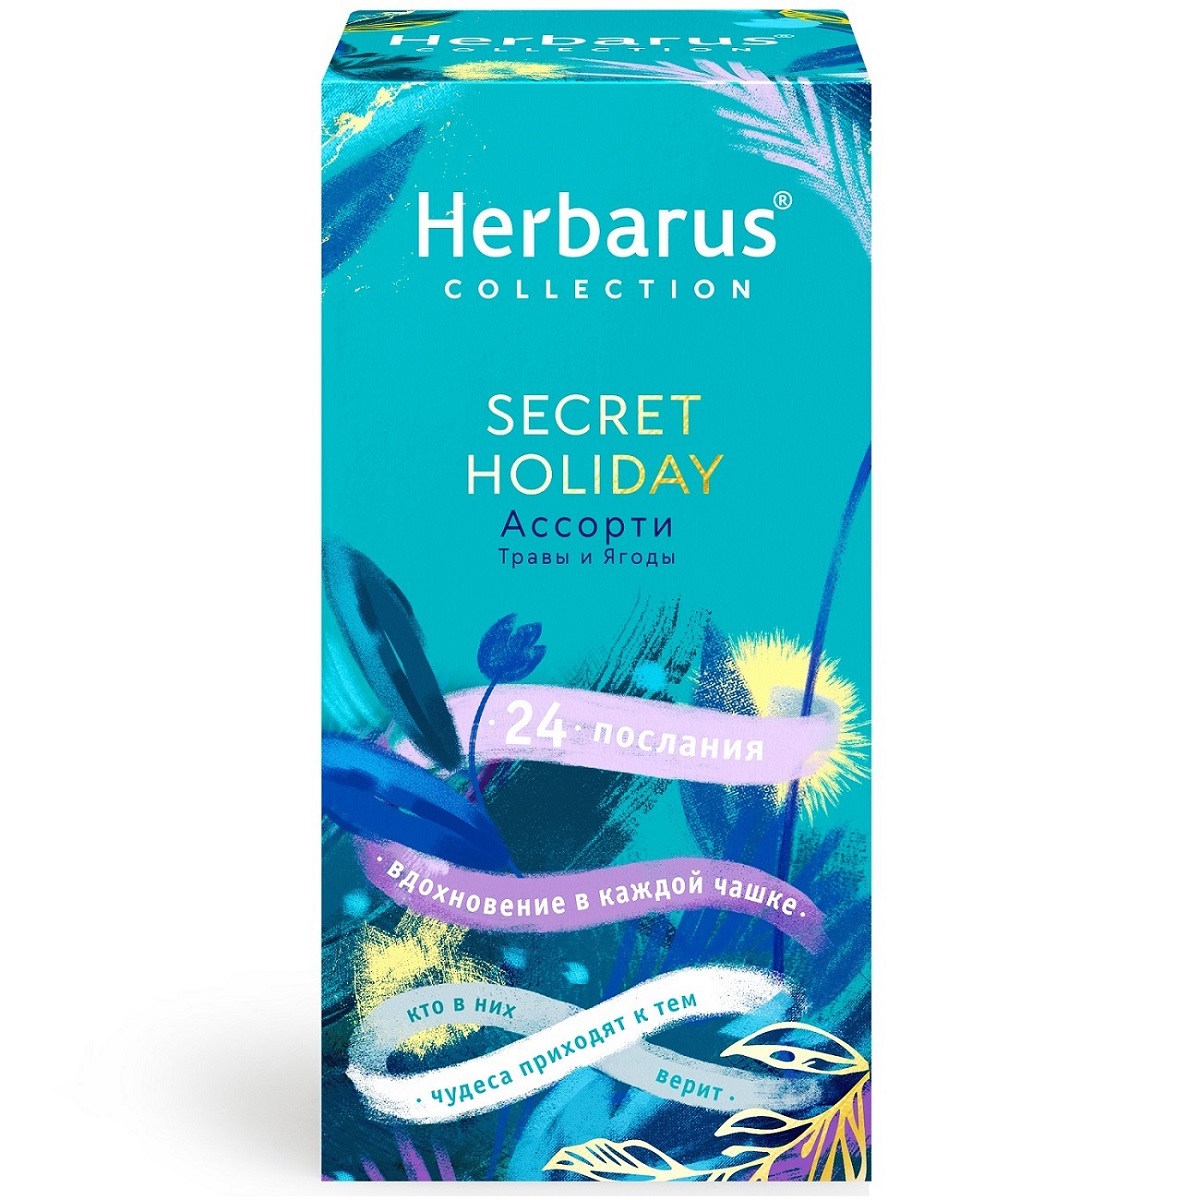 Herbarus Чайный напиток ассорти Secret Holiday, 24 пакетика (Herbarus, Травы и ягоды) herbarus чайный напиток имбирная энергия 24 х 1 8 г herbarus травы и ягоды